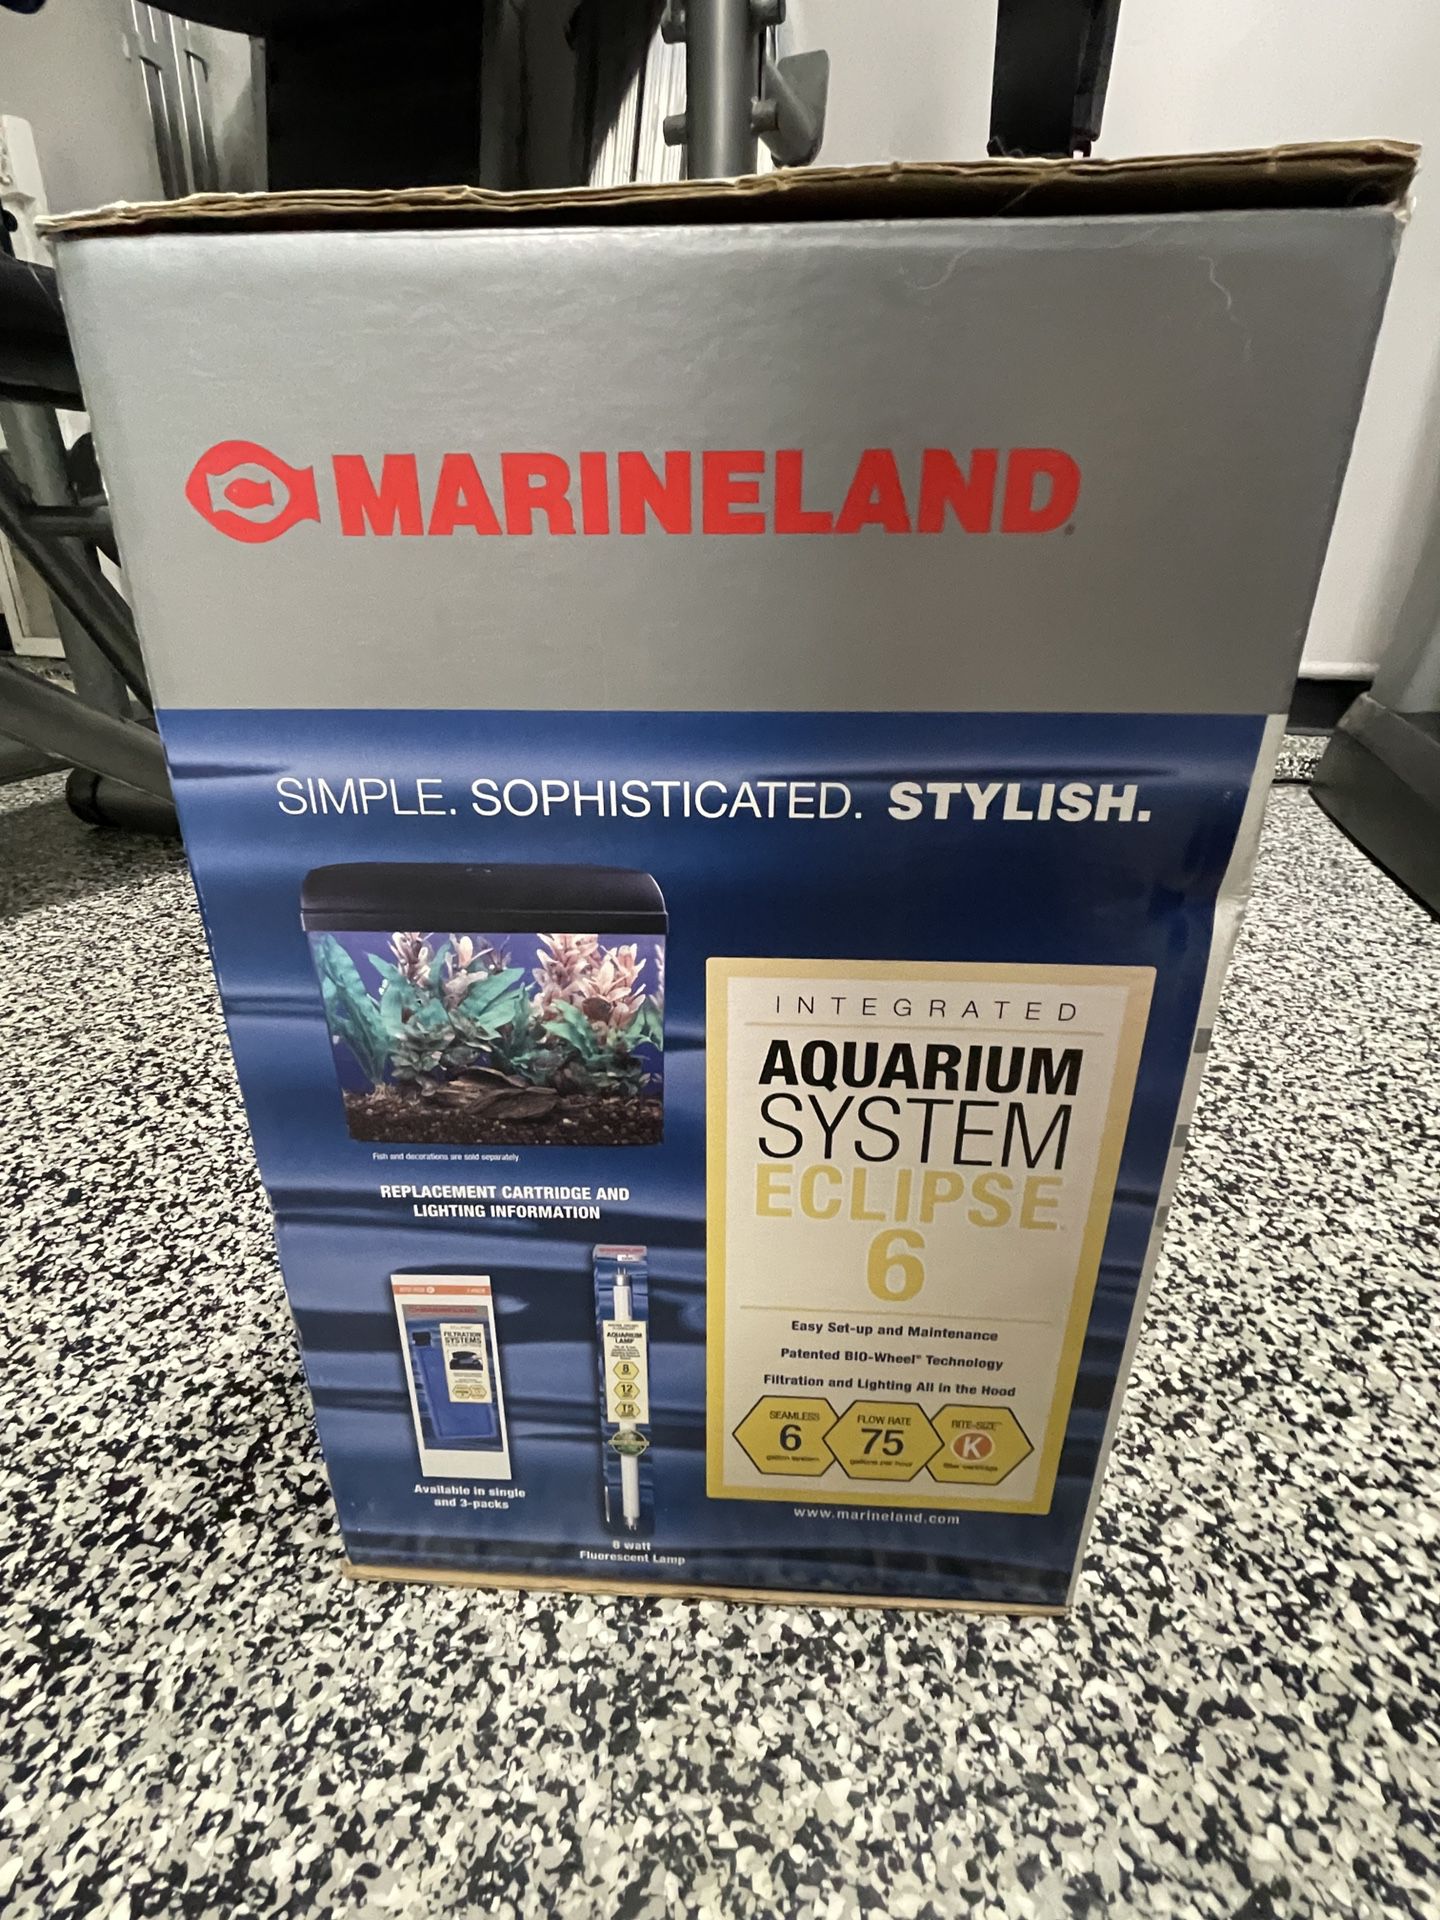 Marineland 6 Gallon Aquarium With Additional Supplies!